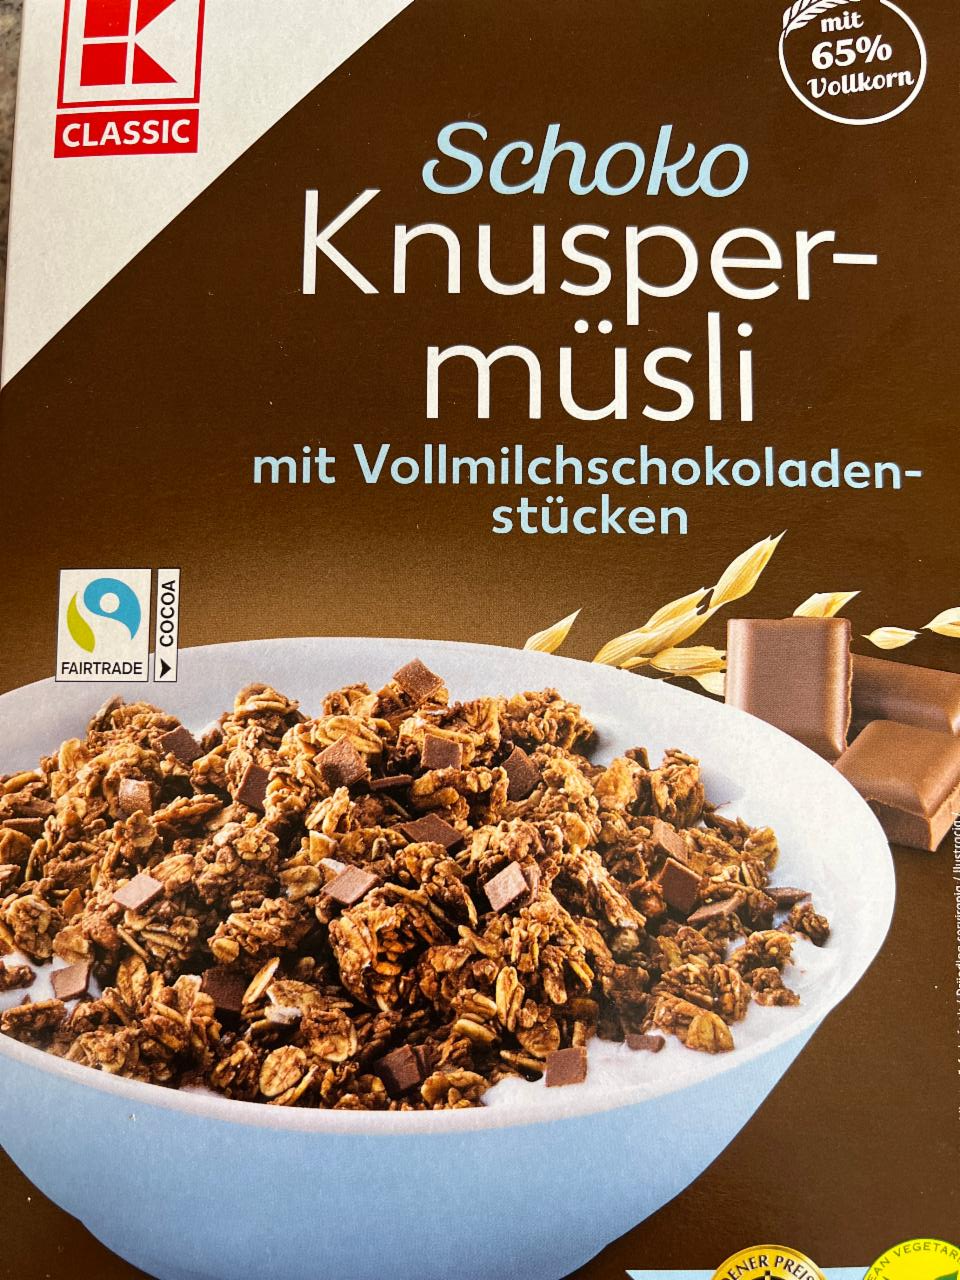 Zdjęcia - Schoko Knusper-müsli mit Vollmilchschokoladen-stücken K-Classic